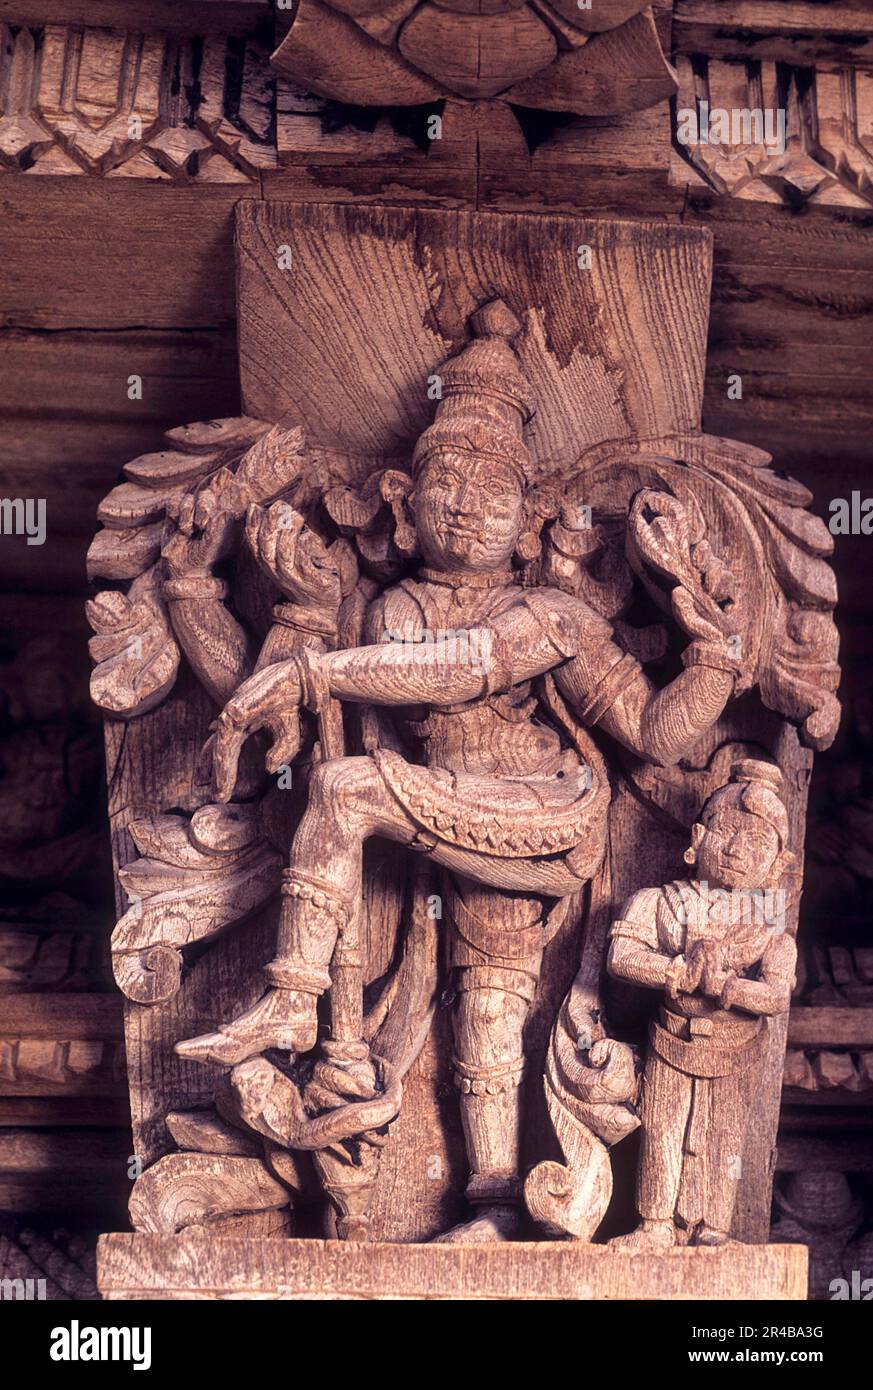 Loard Nataraja Adavallan, 17th century wooden carvings in Meenakshi-Sundareswarar temple Chariot at Madurai, Tamil Nadu, South India, India, Asia Stock Photo